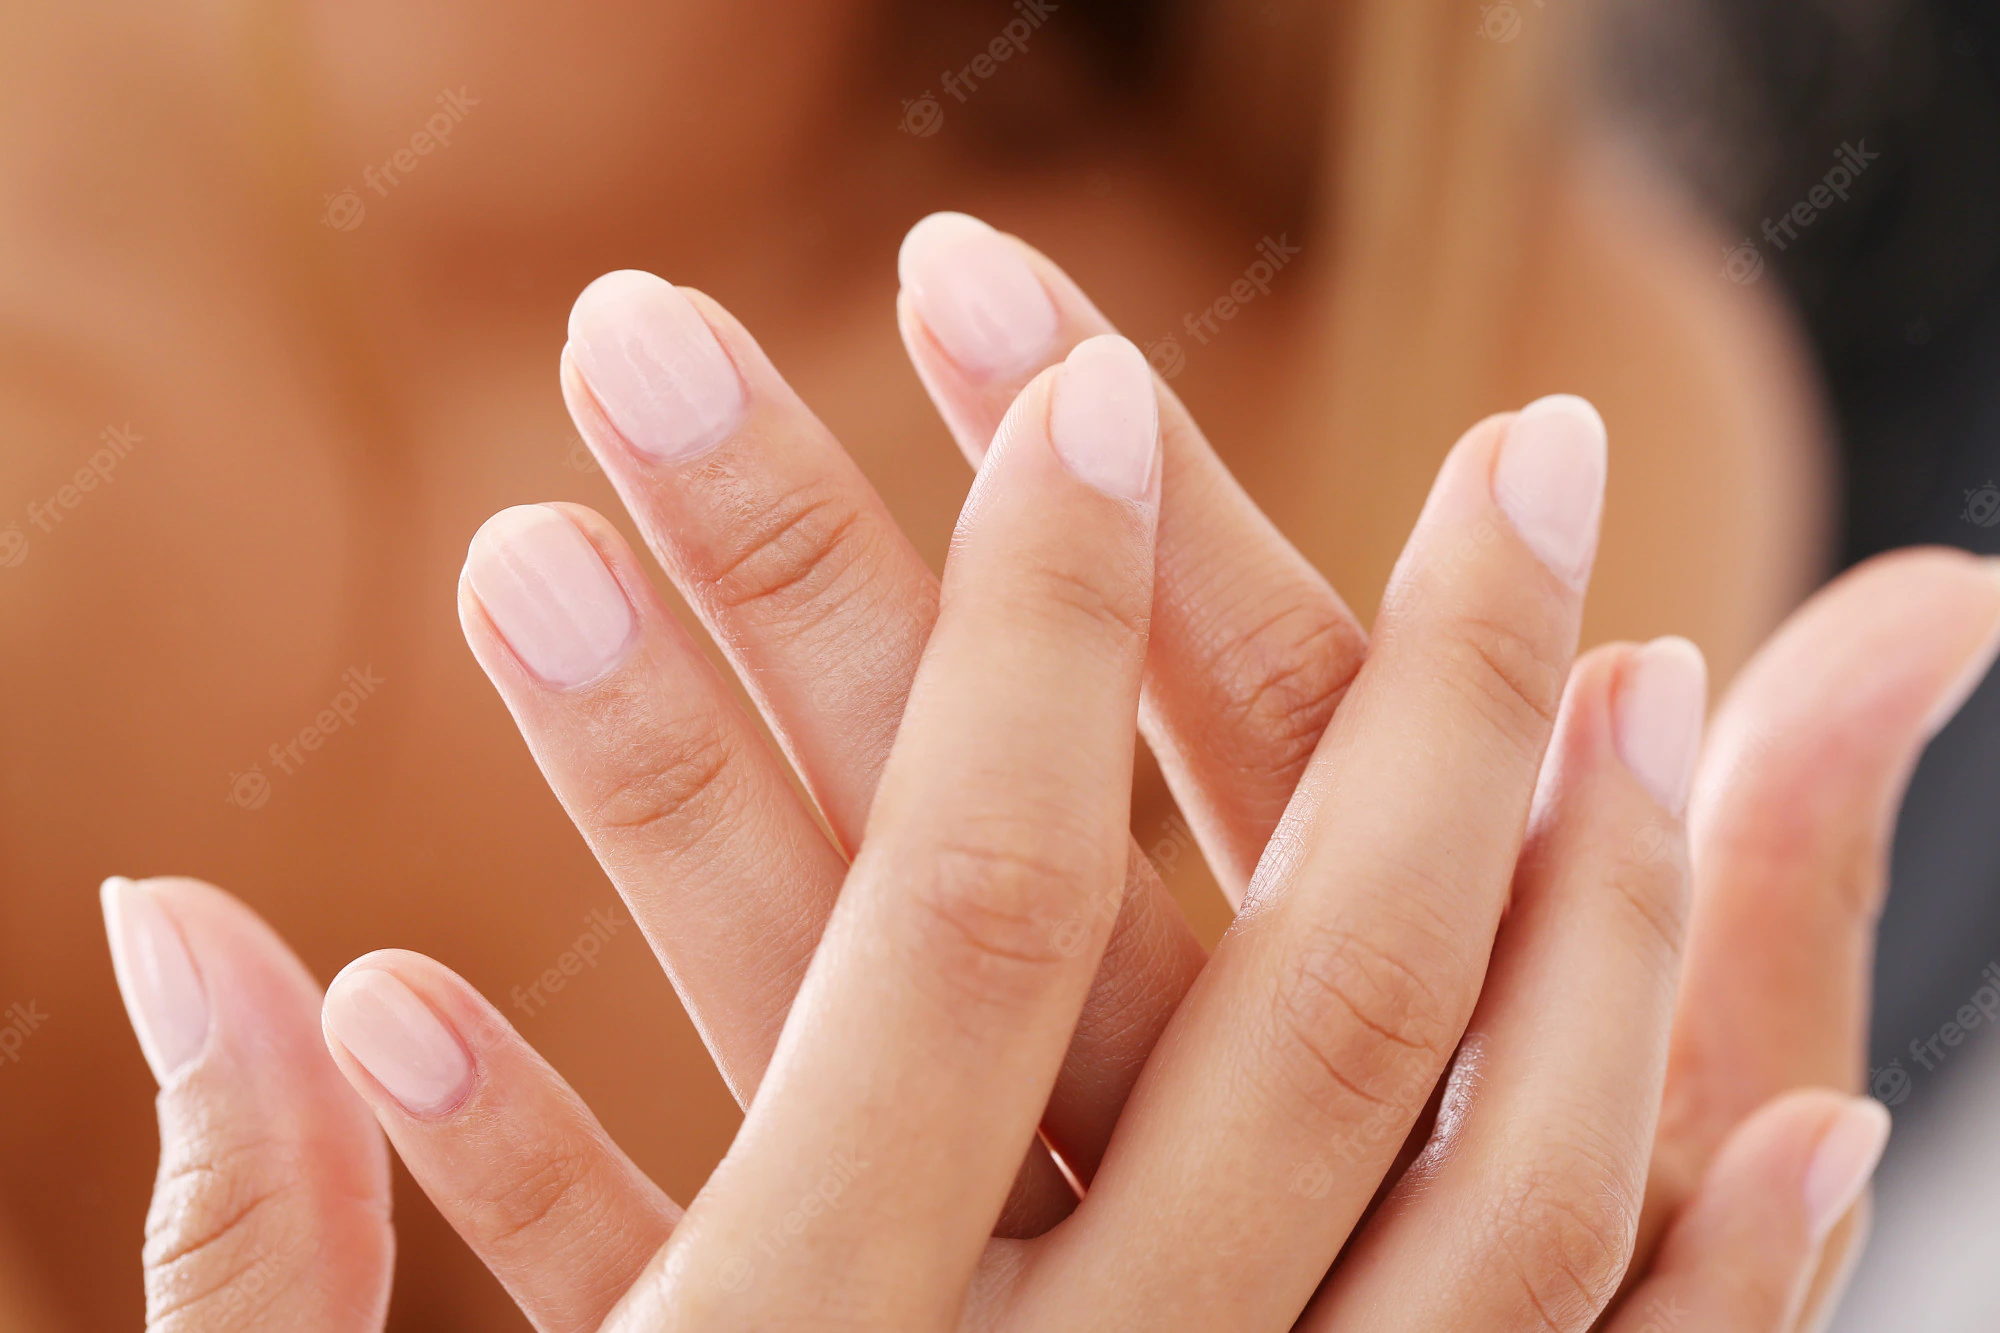 Do Acrylics Ruin Your Nails?